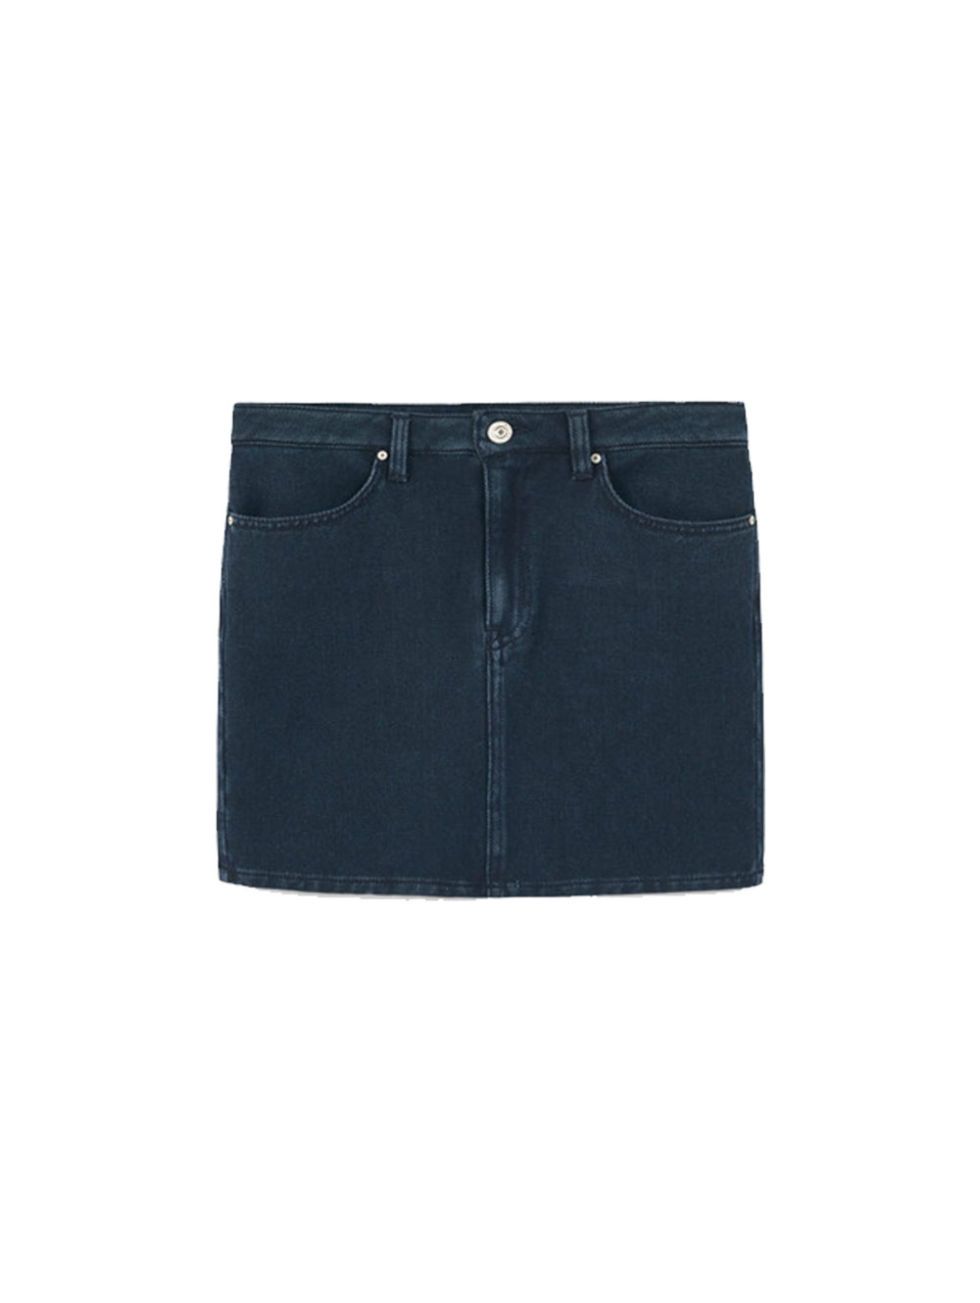 Denim, Textile, Pocket, Electric blue, Tan, Leather, Bermuda shorts, 